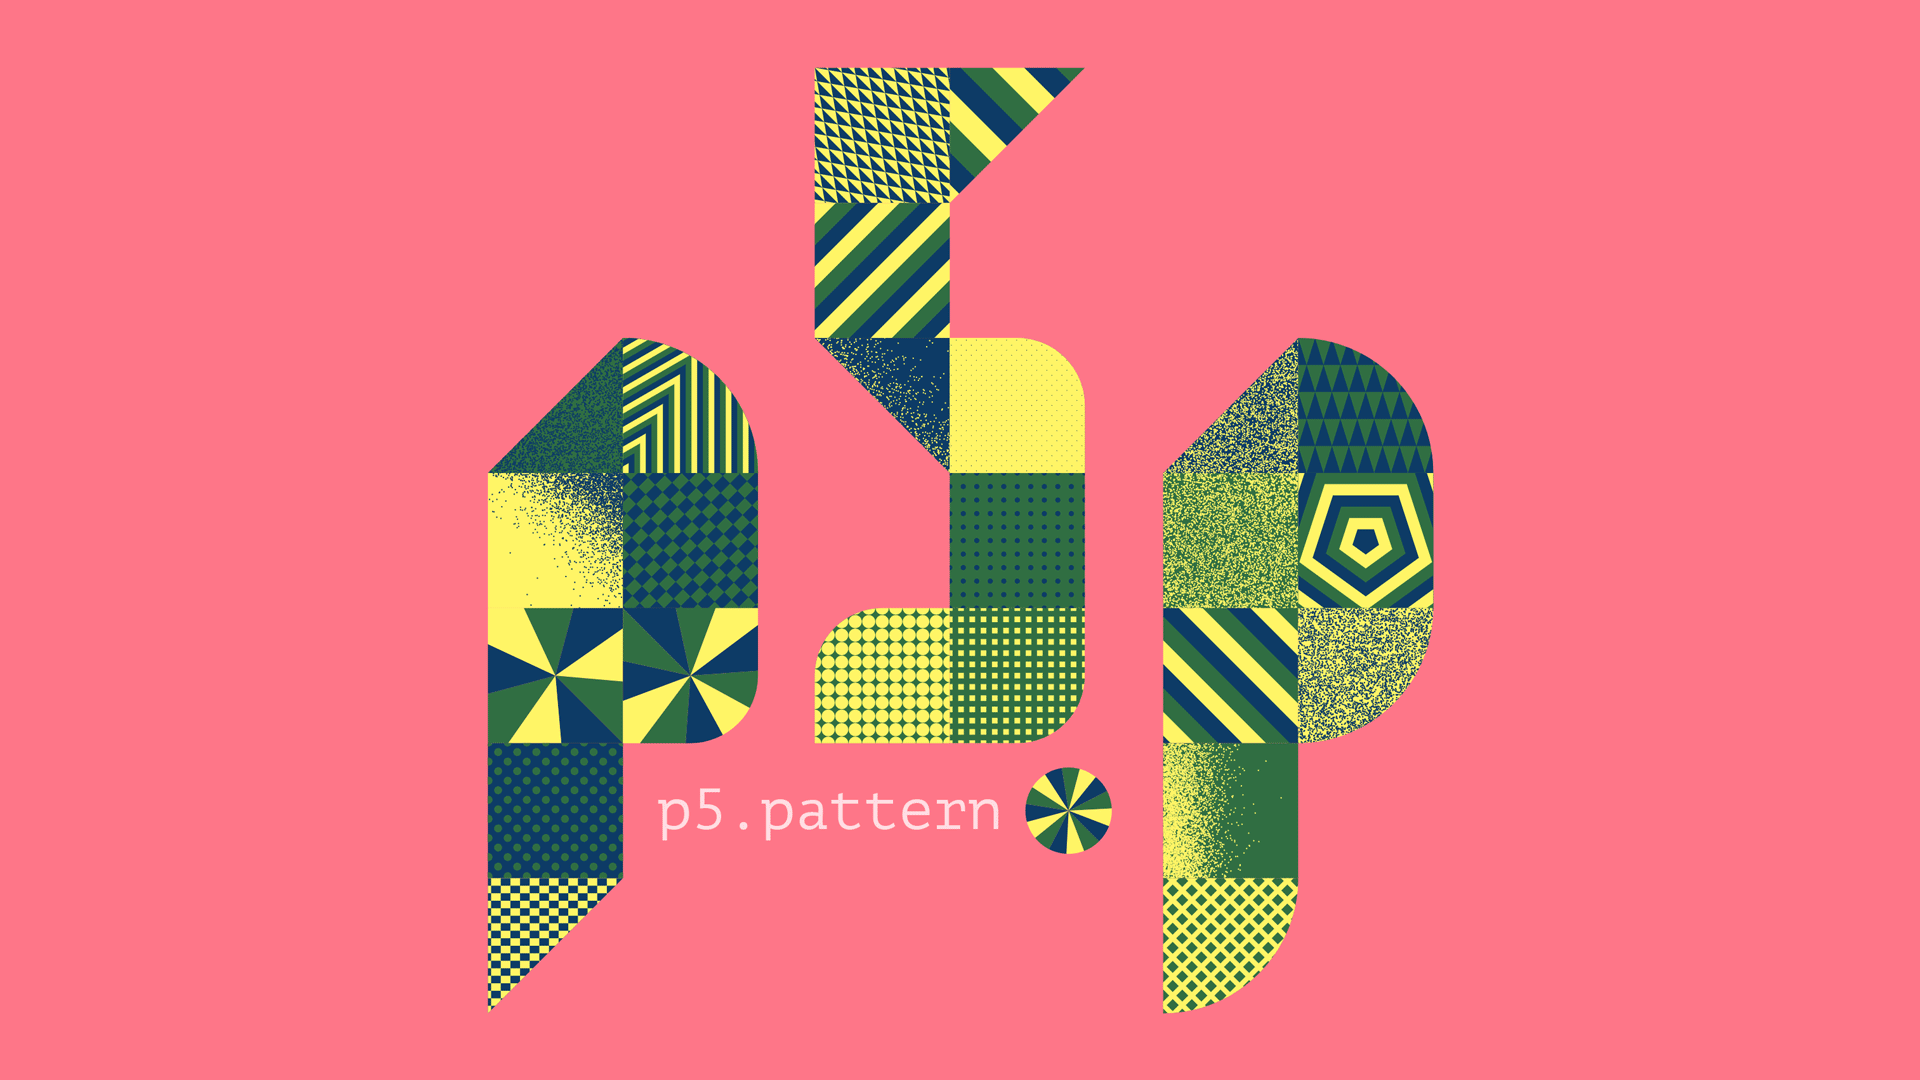 p5.pattern